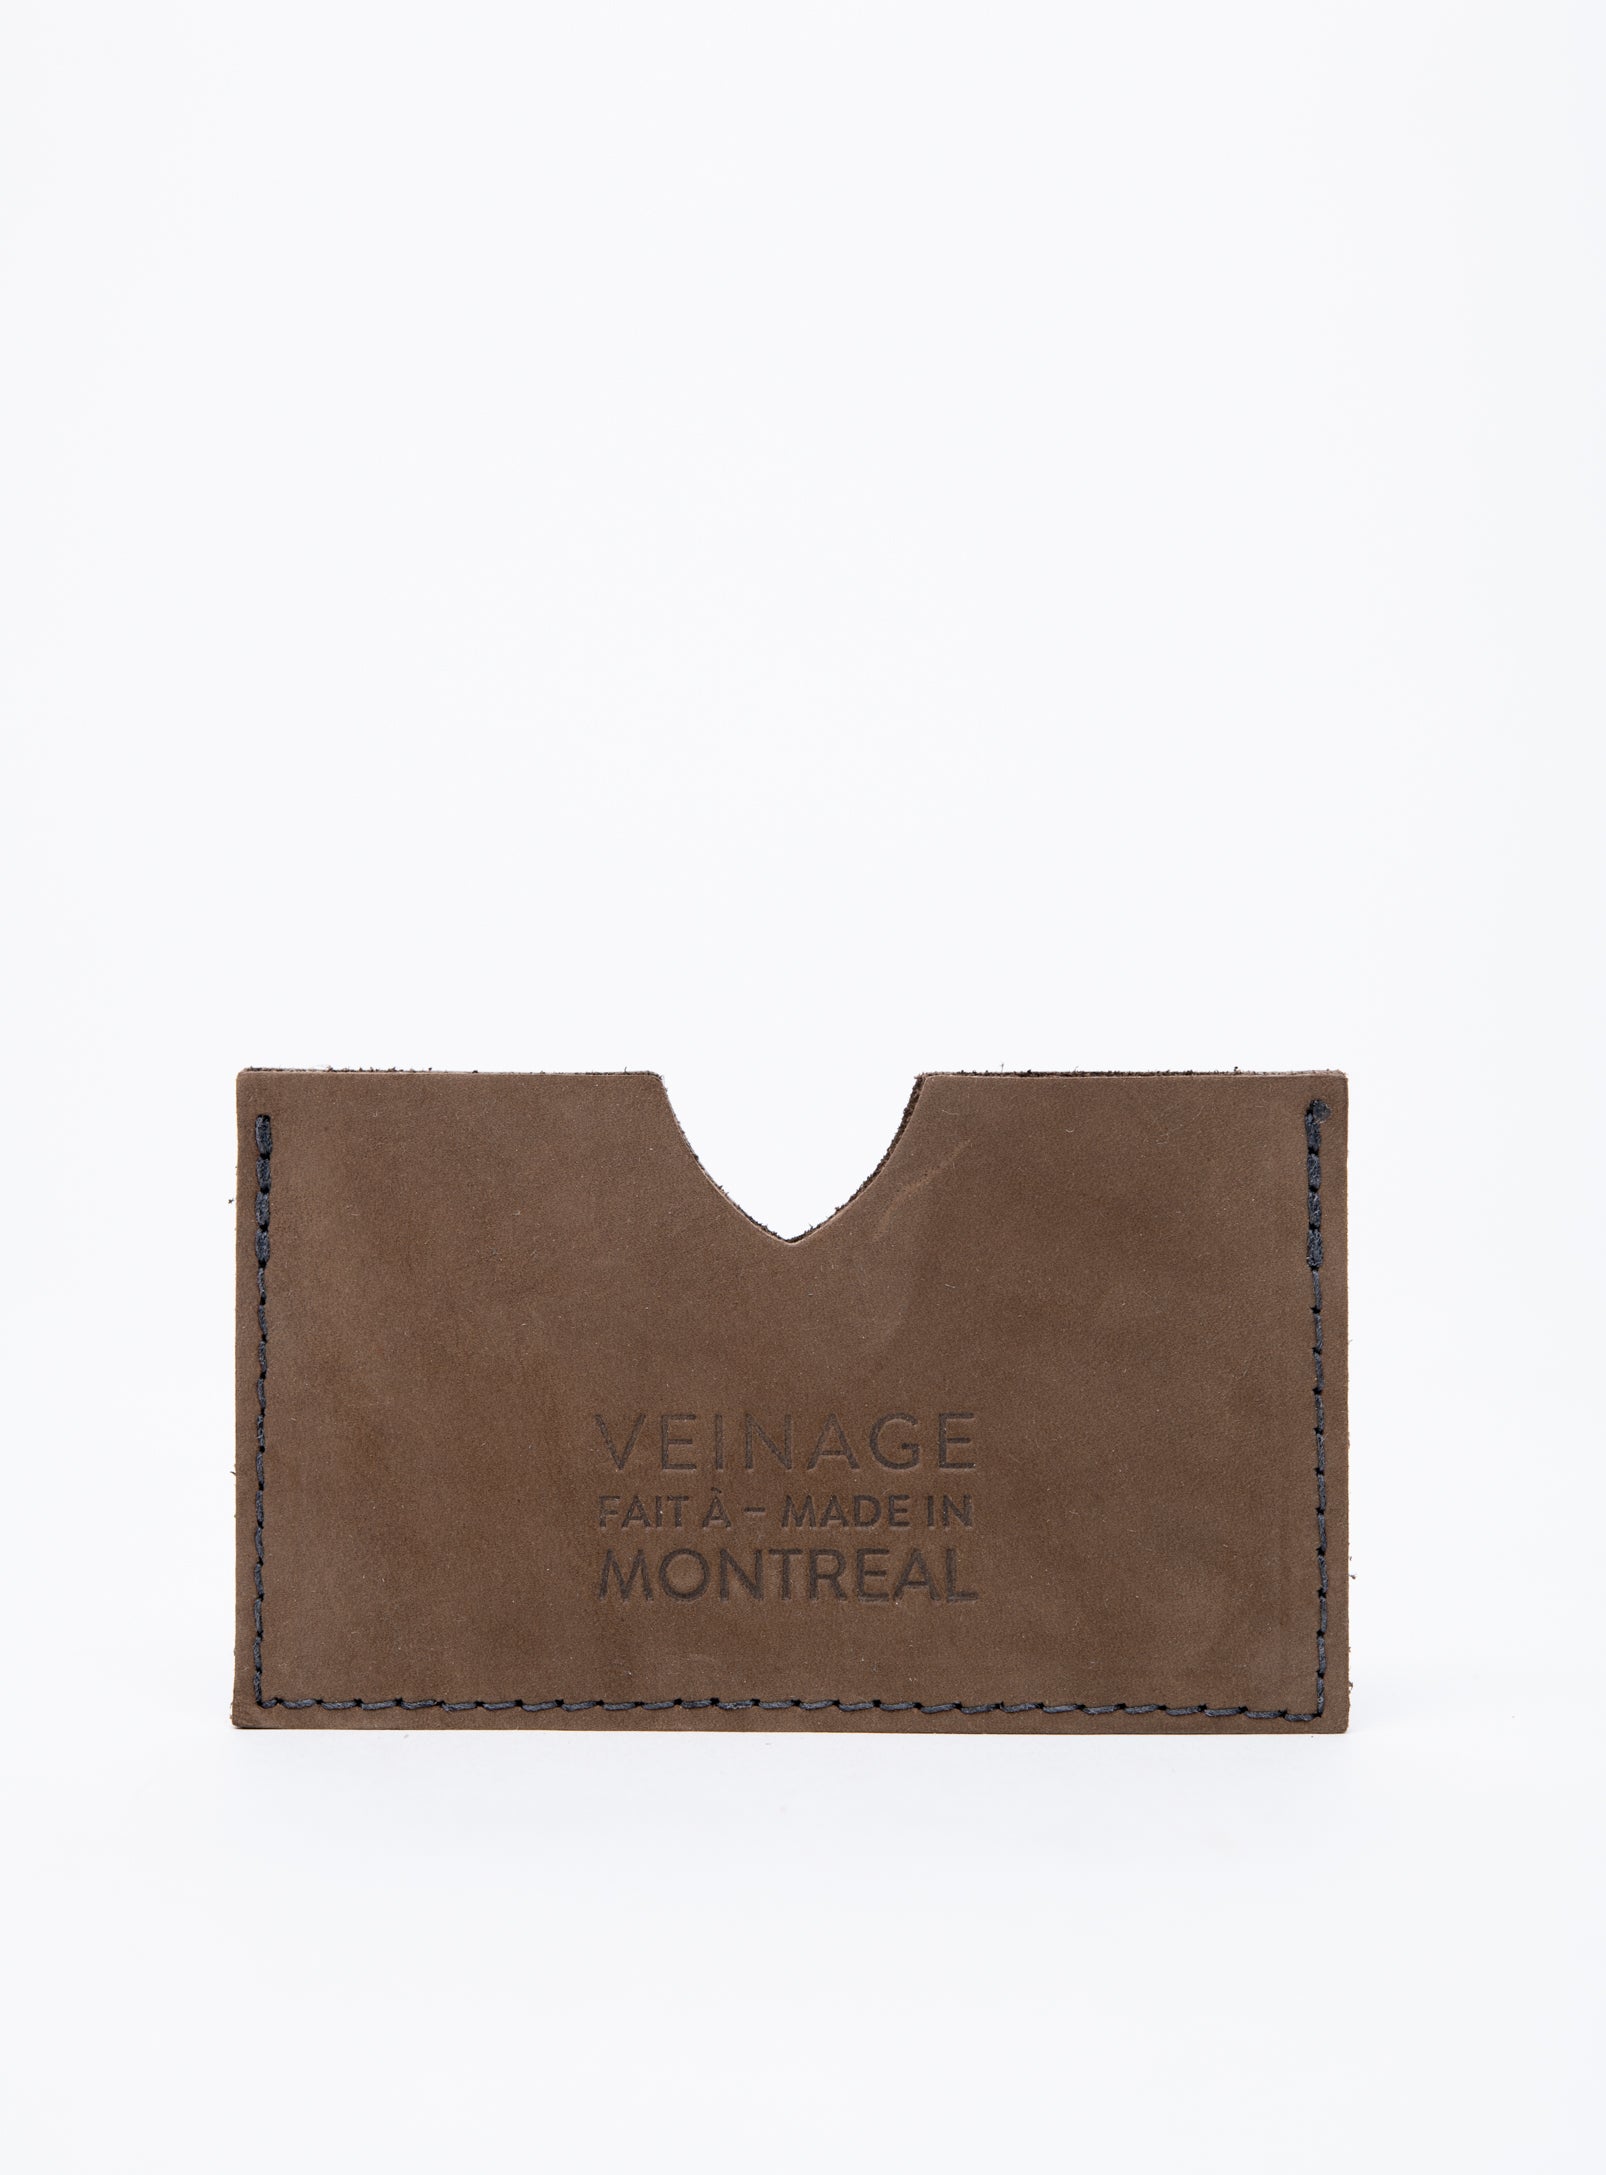 Leather minimalist card holder CHABOT model